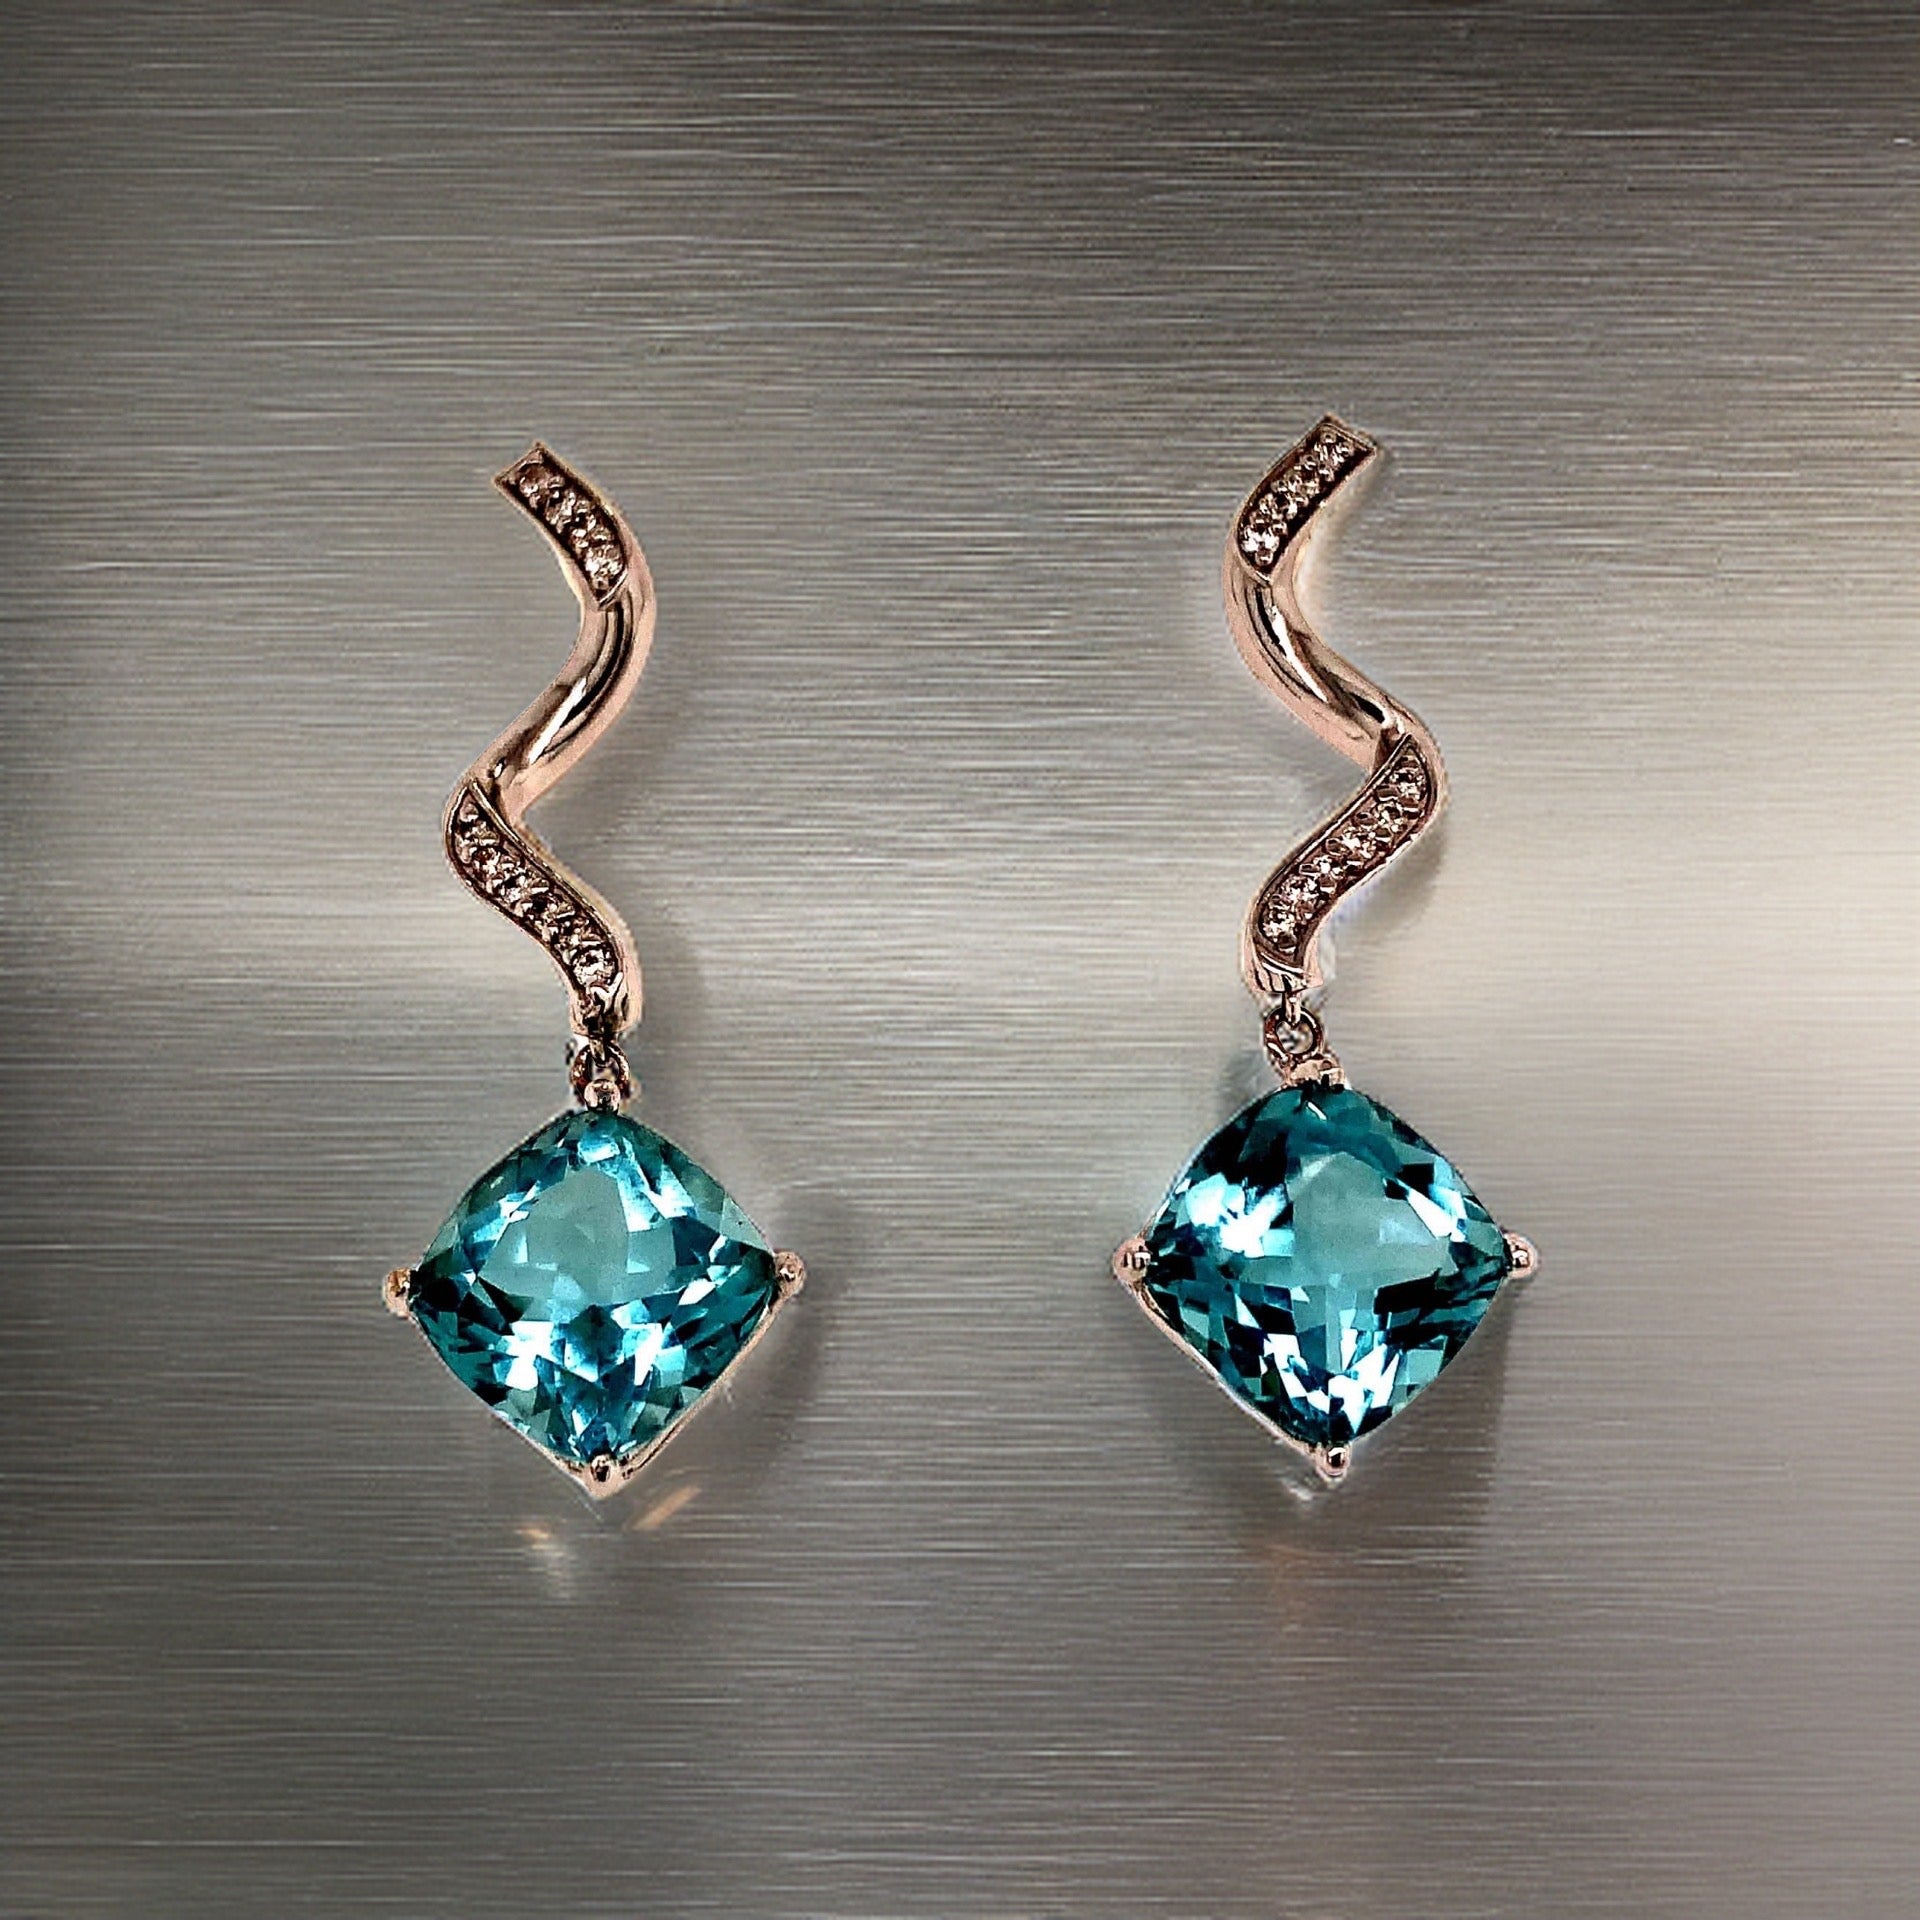 Natural Aquamarine Diamond Earrings 14k Gold 8.15 TCW Certified $4,950 111528 - Certified Fine Jewelry